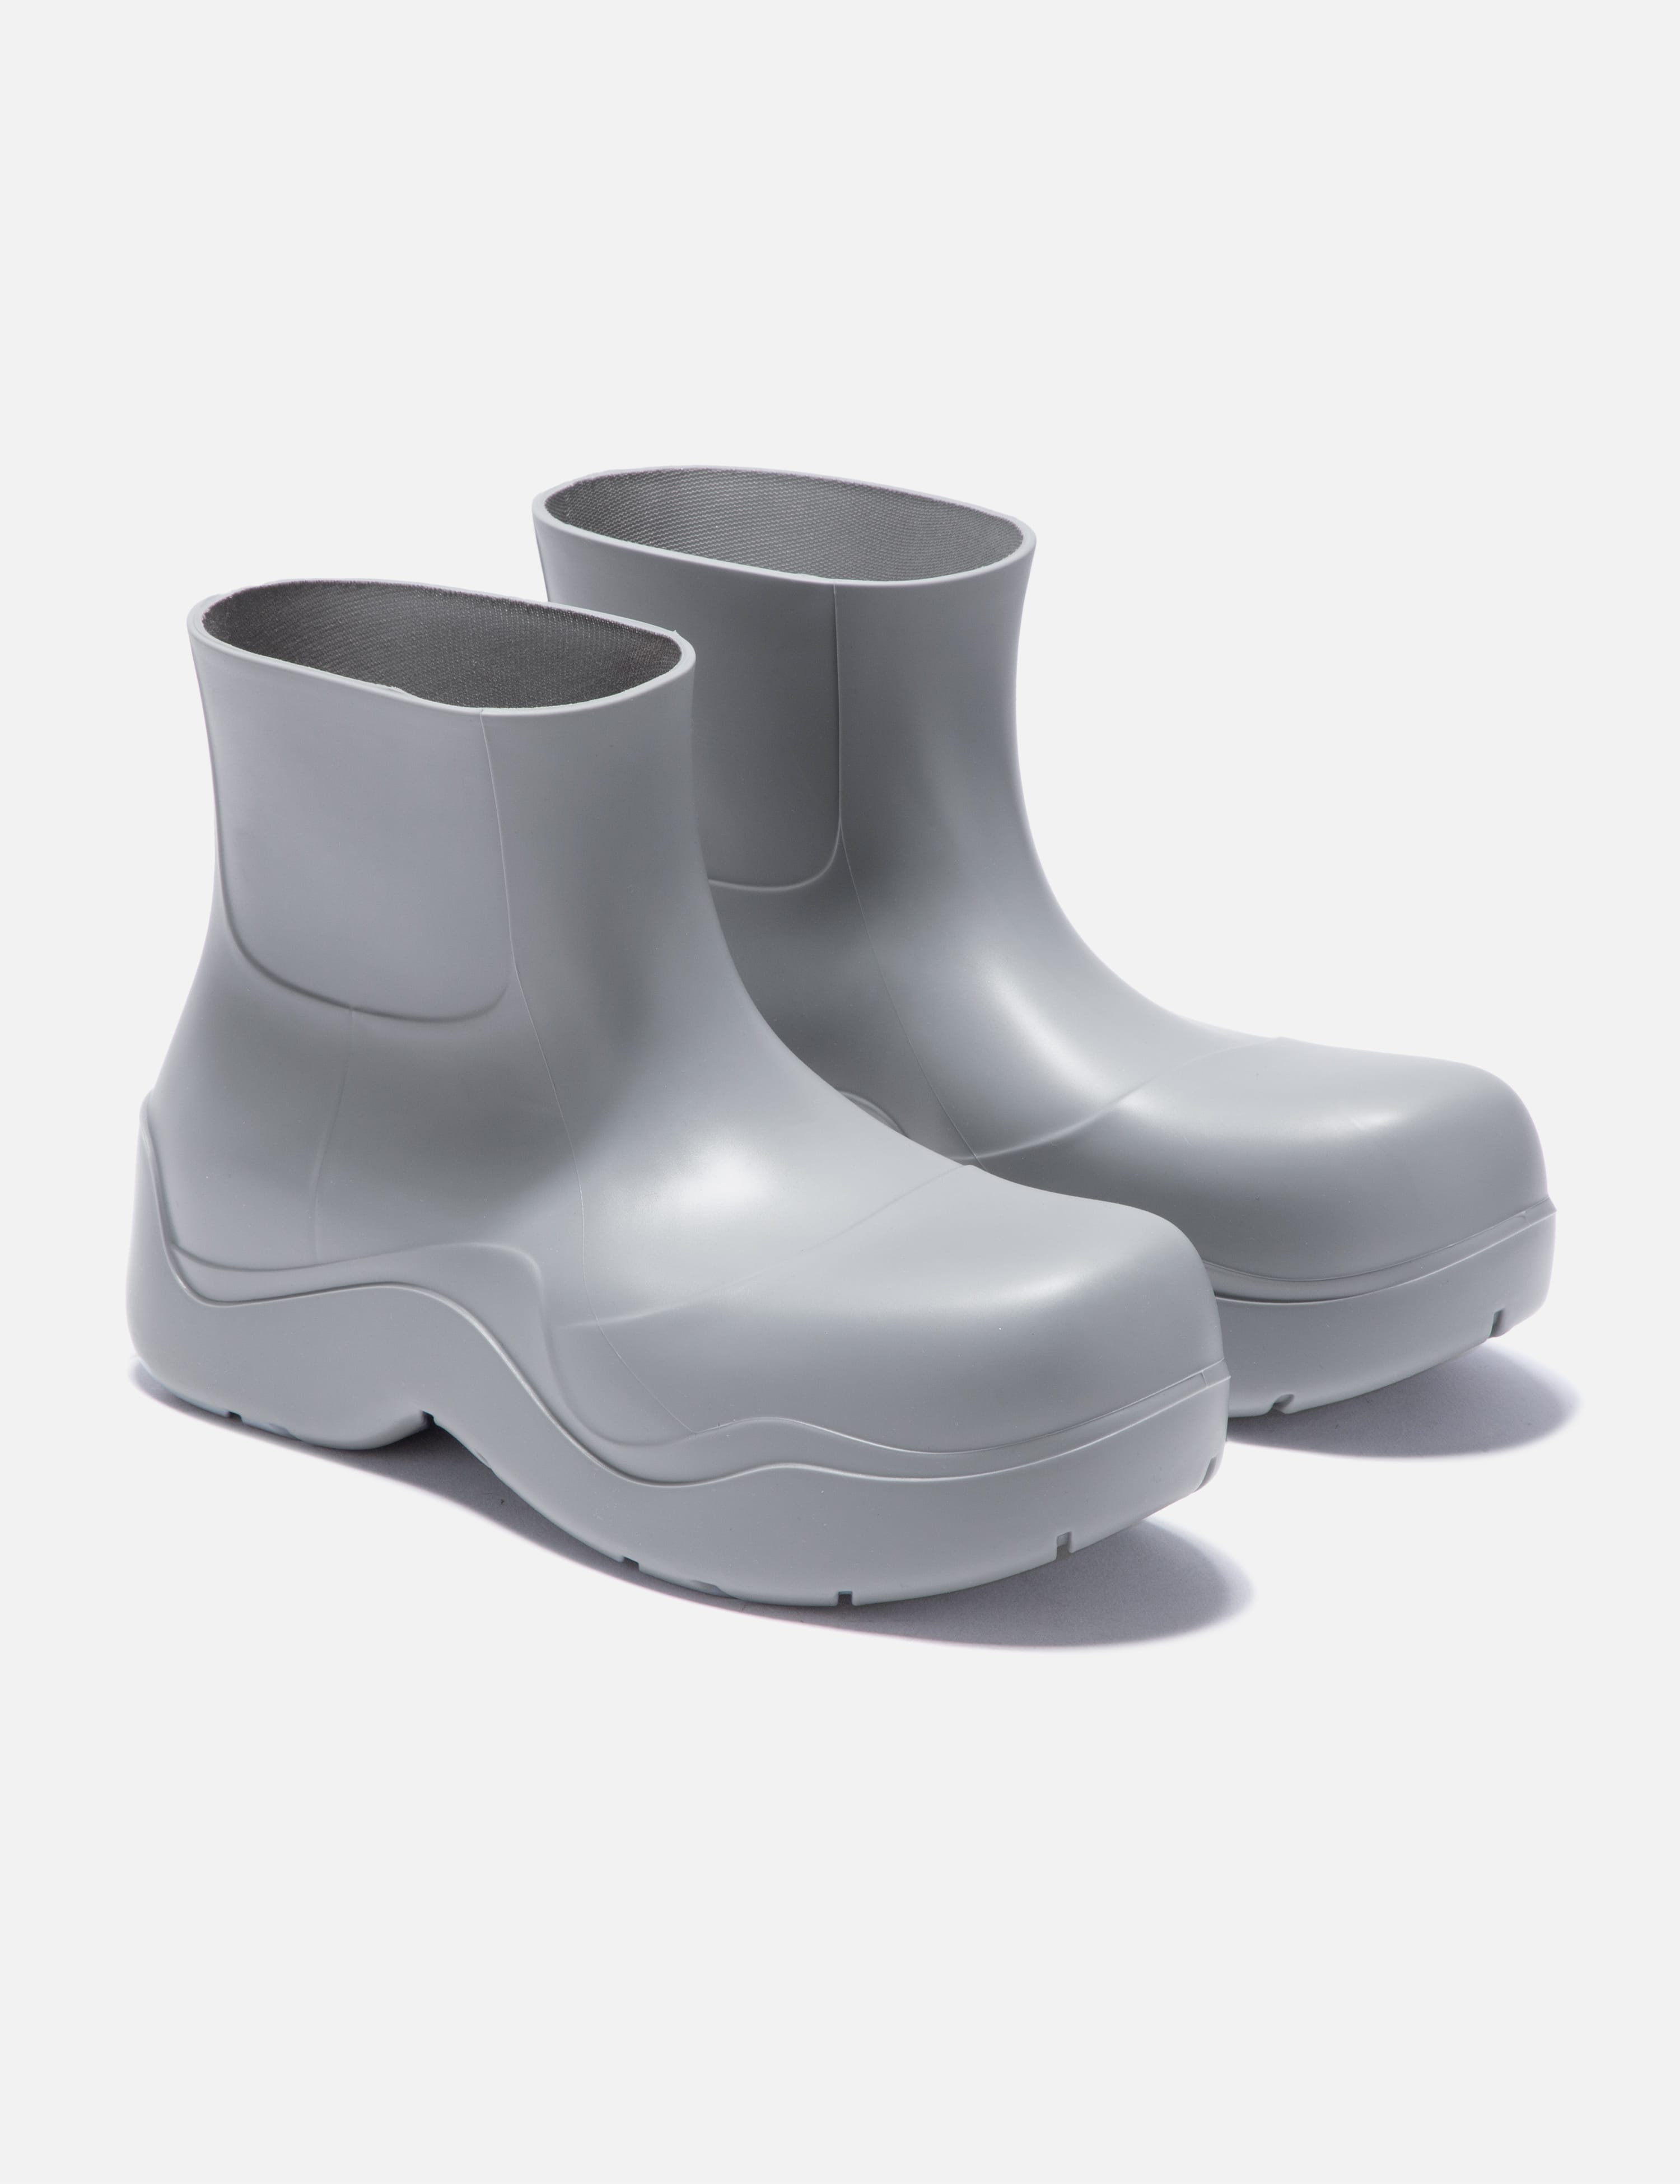 Bottega Veneta - Puddle Ankle Boots | HBX - Globally Curated